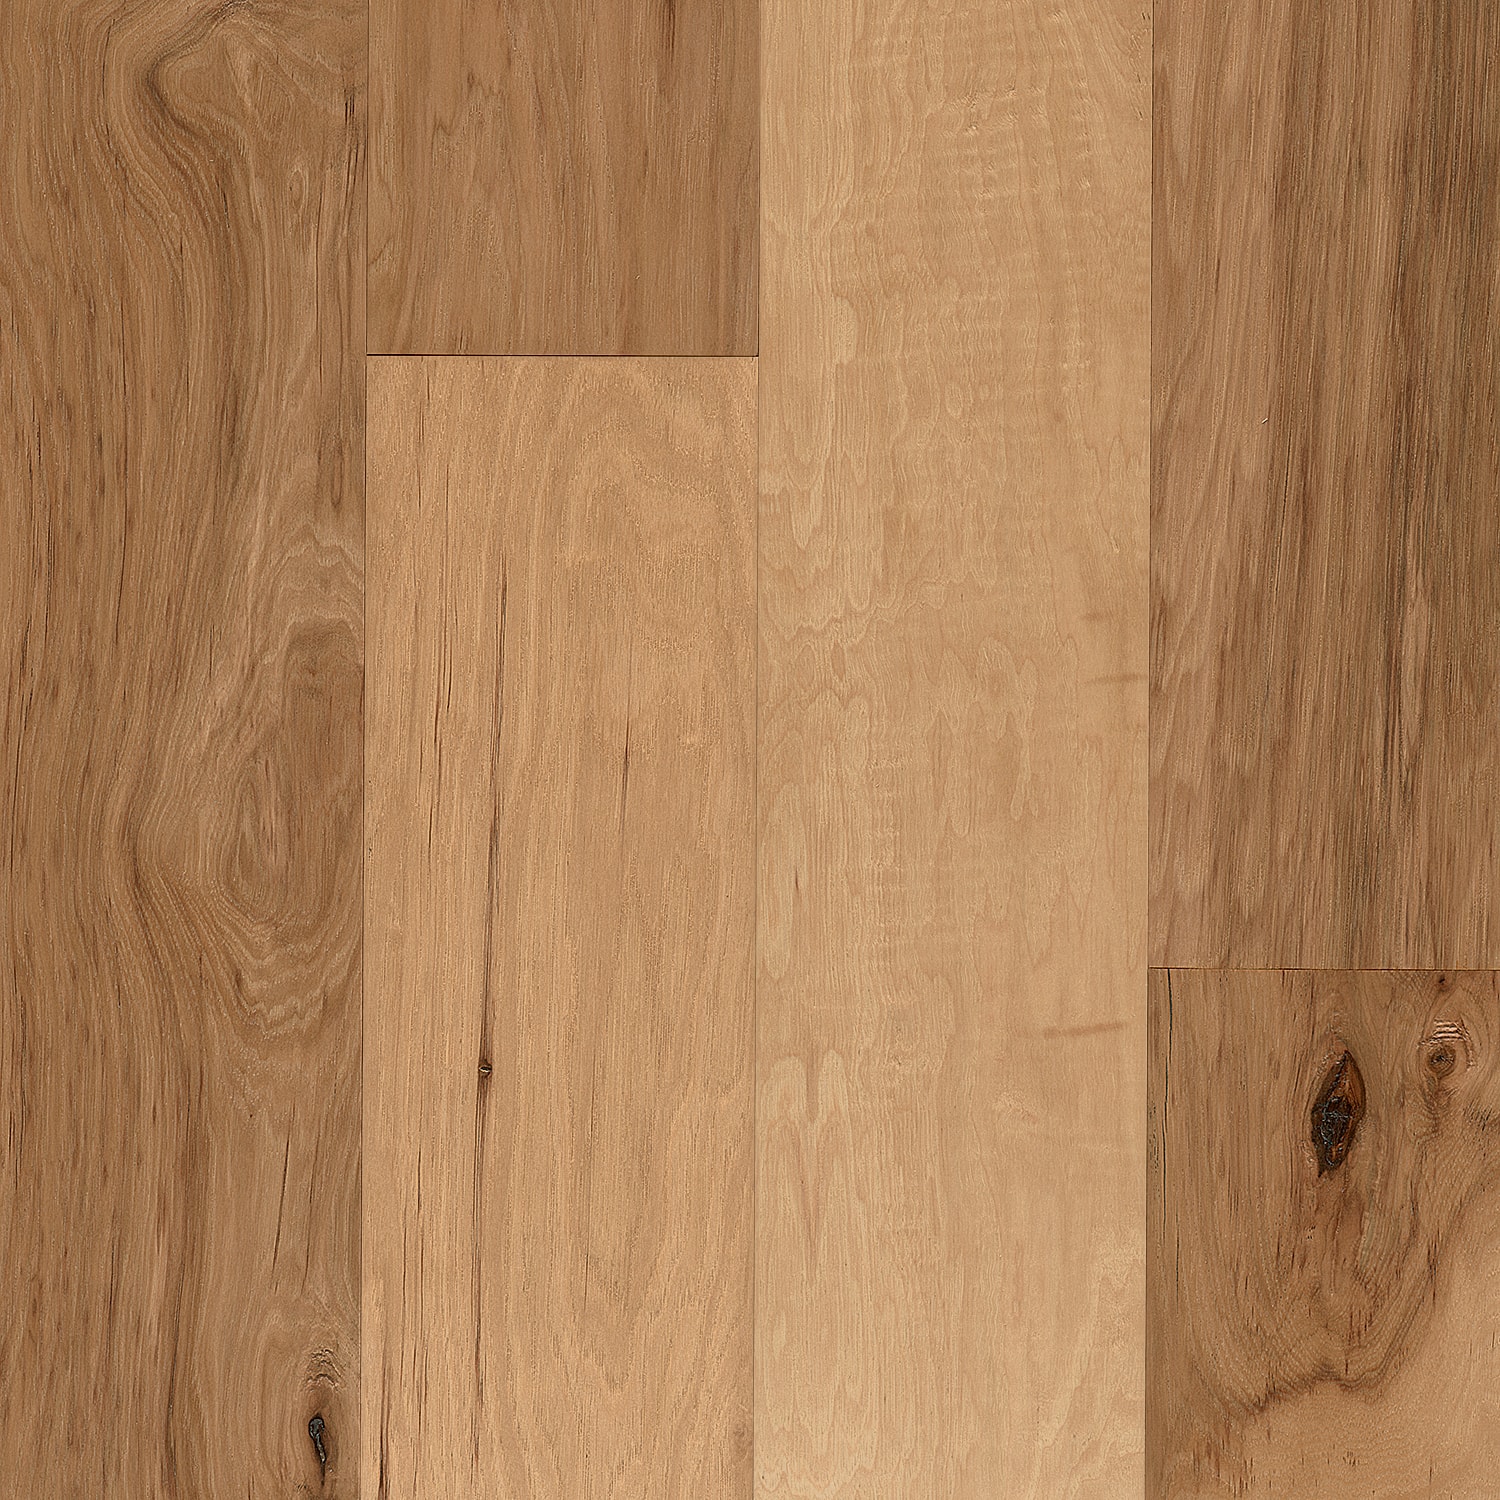 Natural hardwood floor